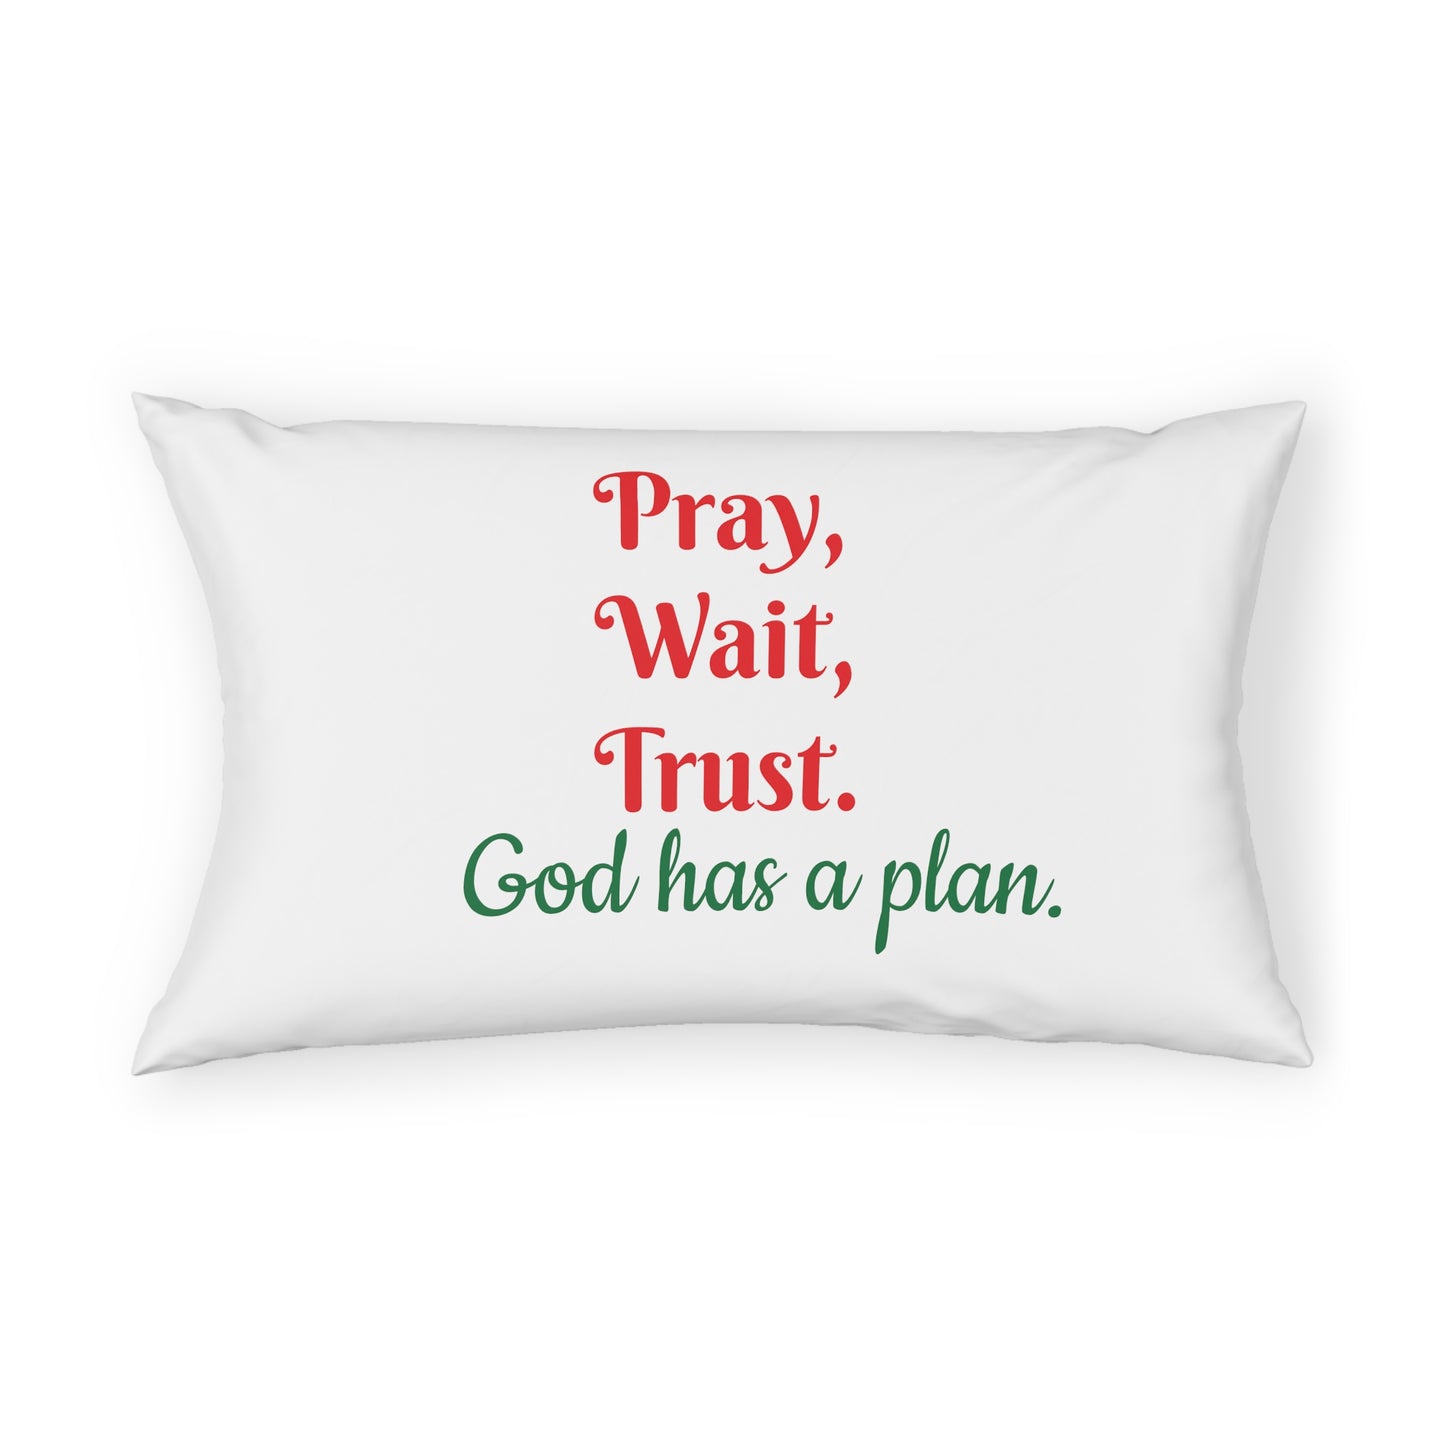 Pillow Sham for Christmas Pray Wait Trust God has a plan Red & Green Letter Pillow Sham